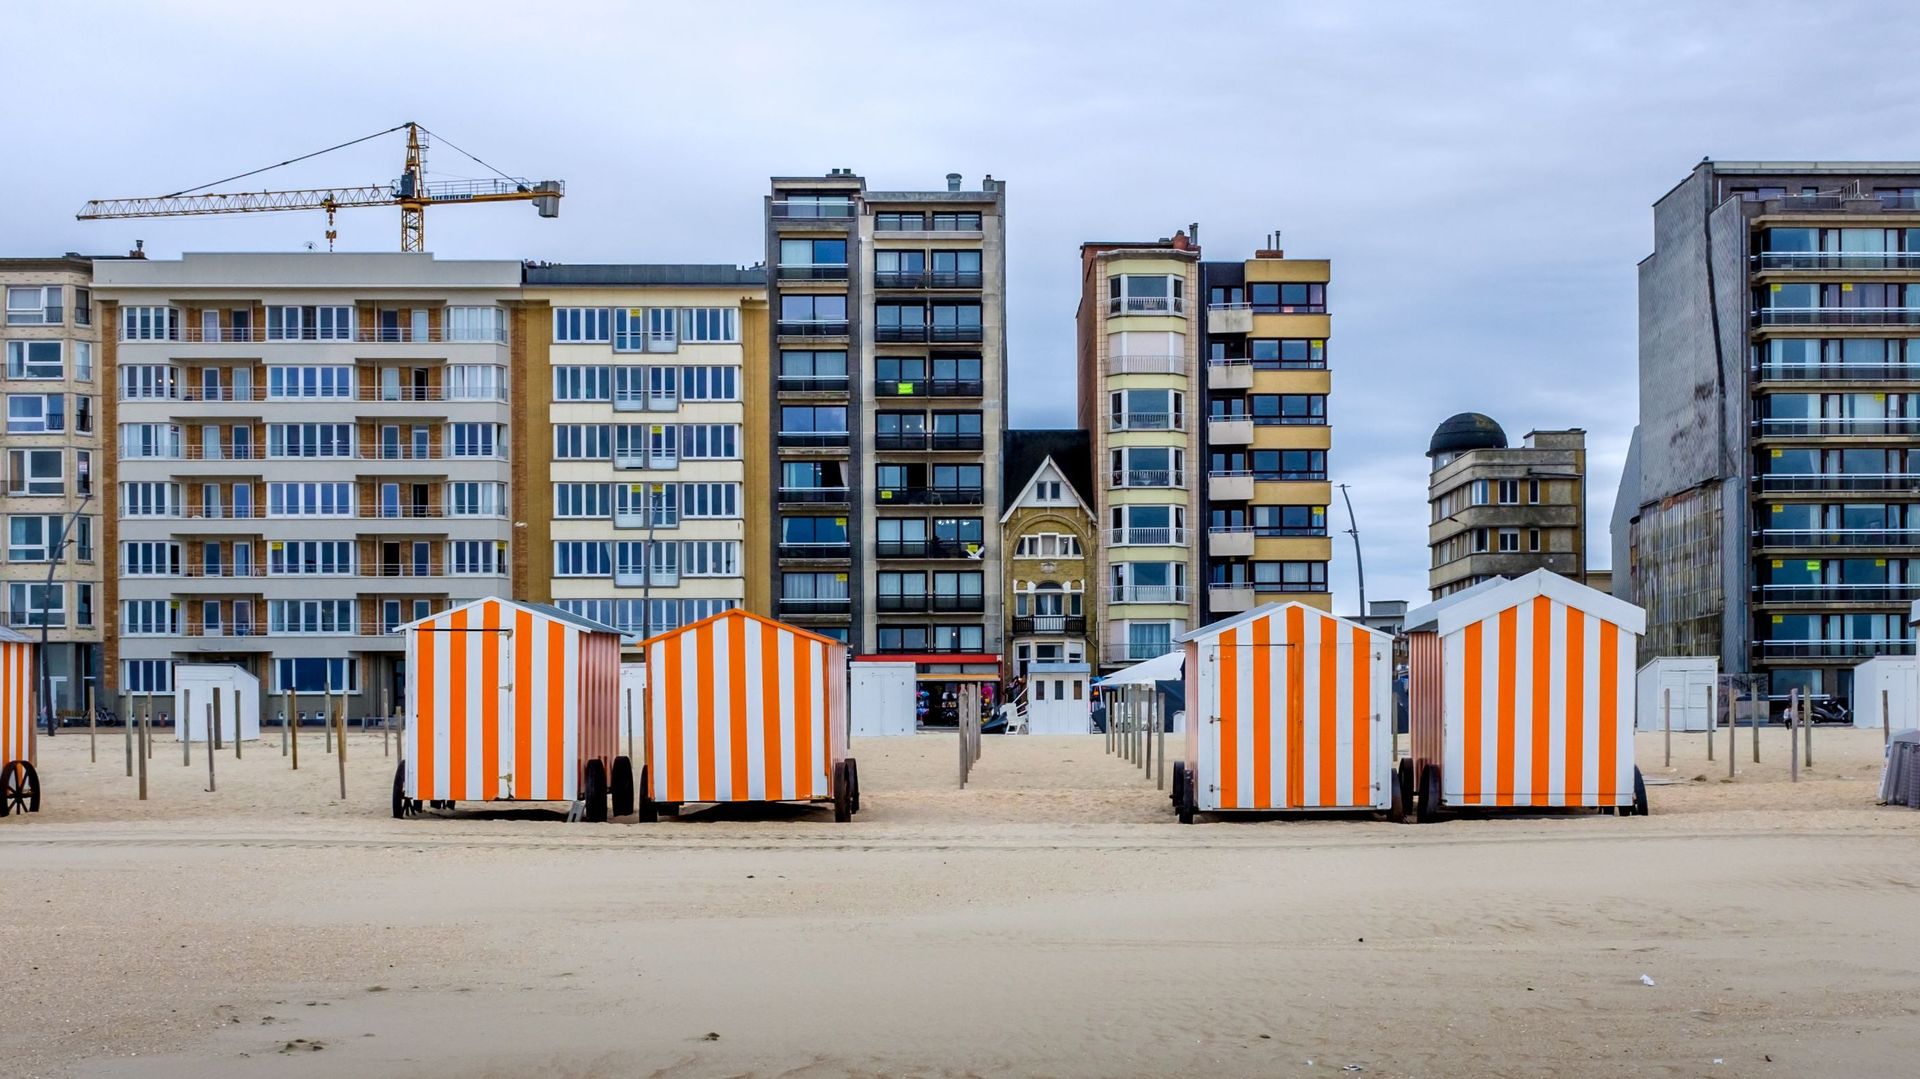 Row Of Colorful Beach Cabins Against Buildings In De Panne, Belgium